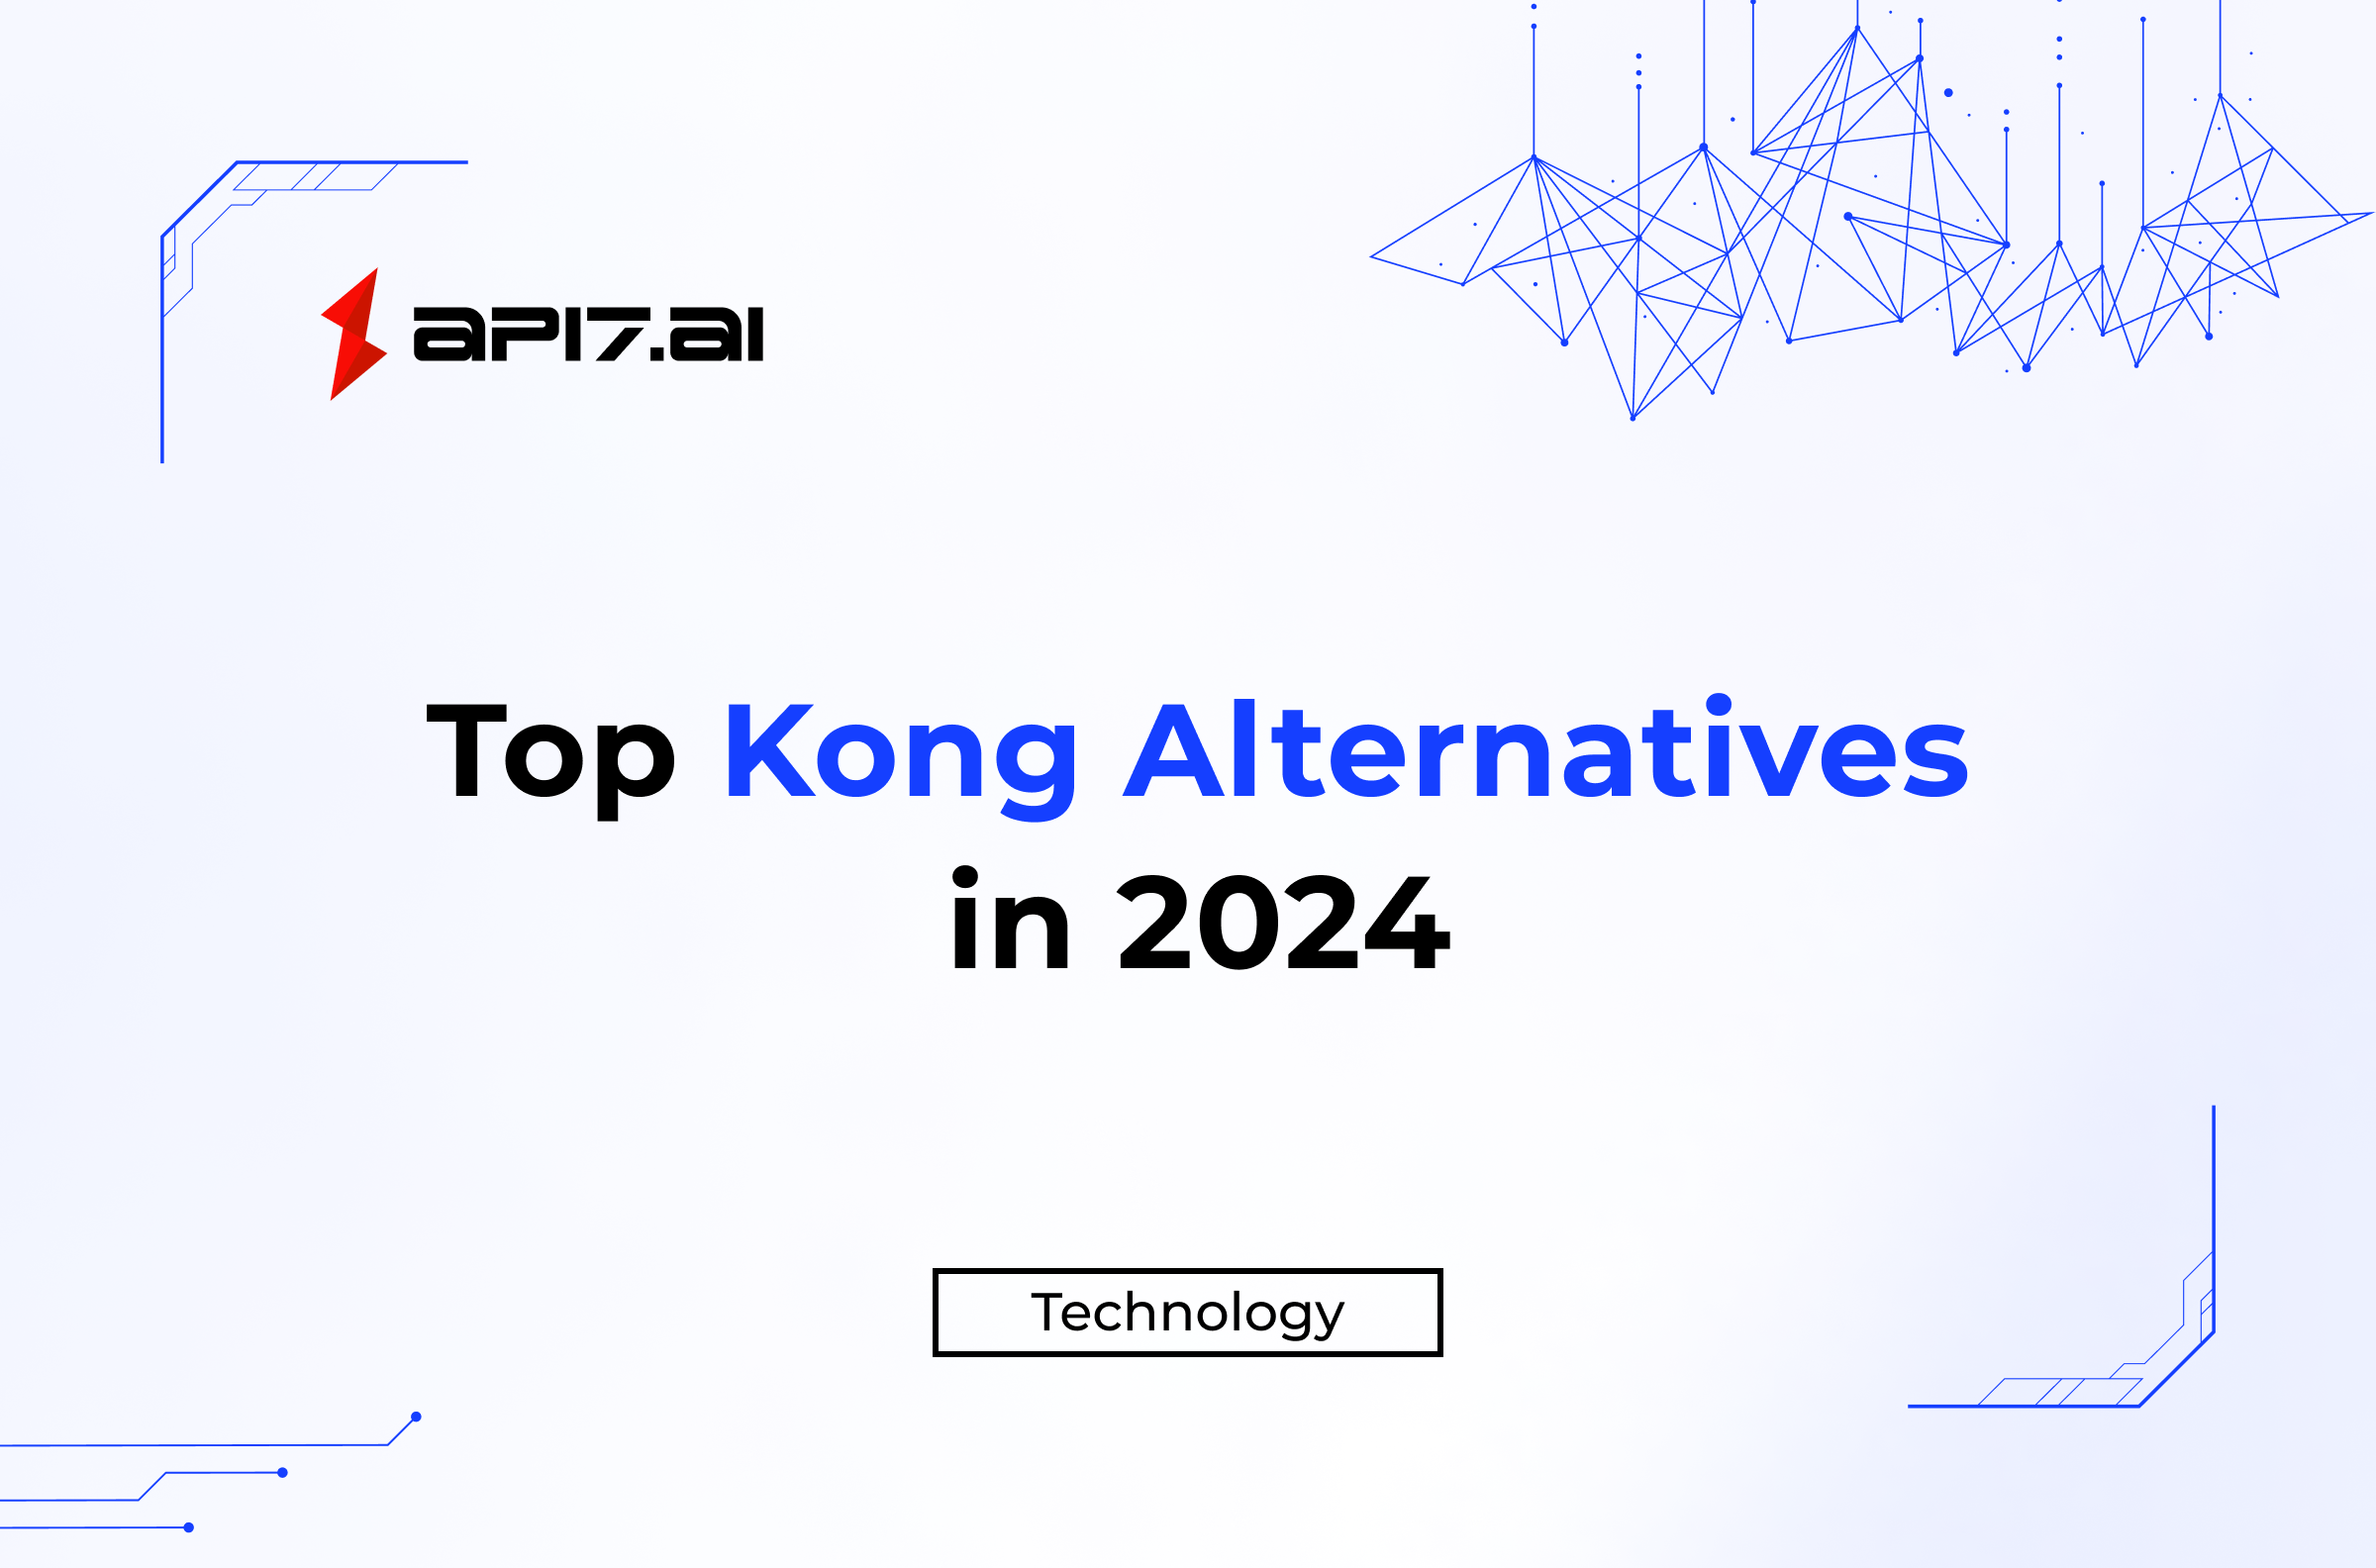 Top Kong Alternatives in 2024